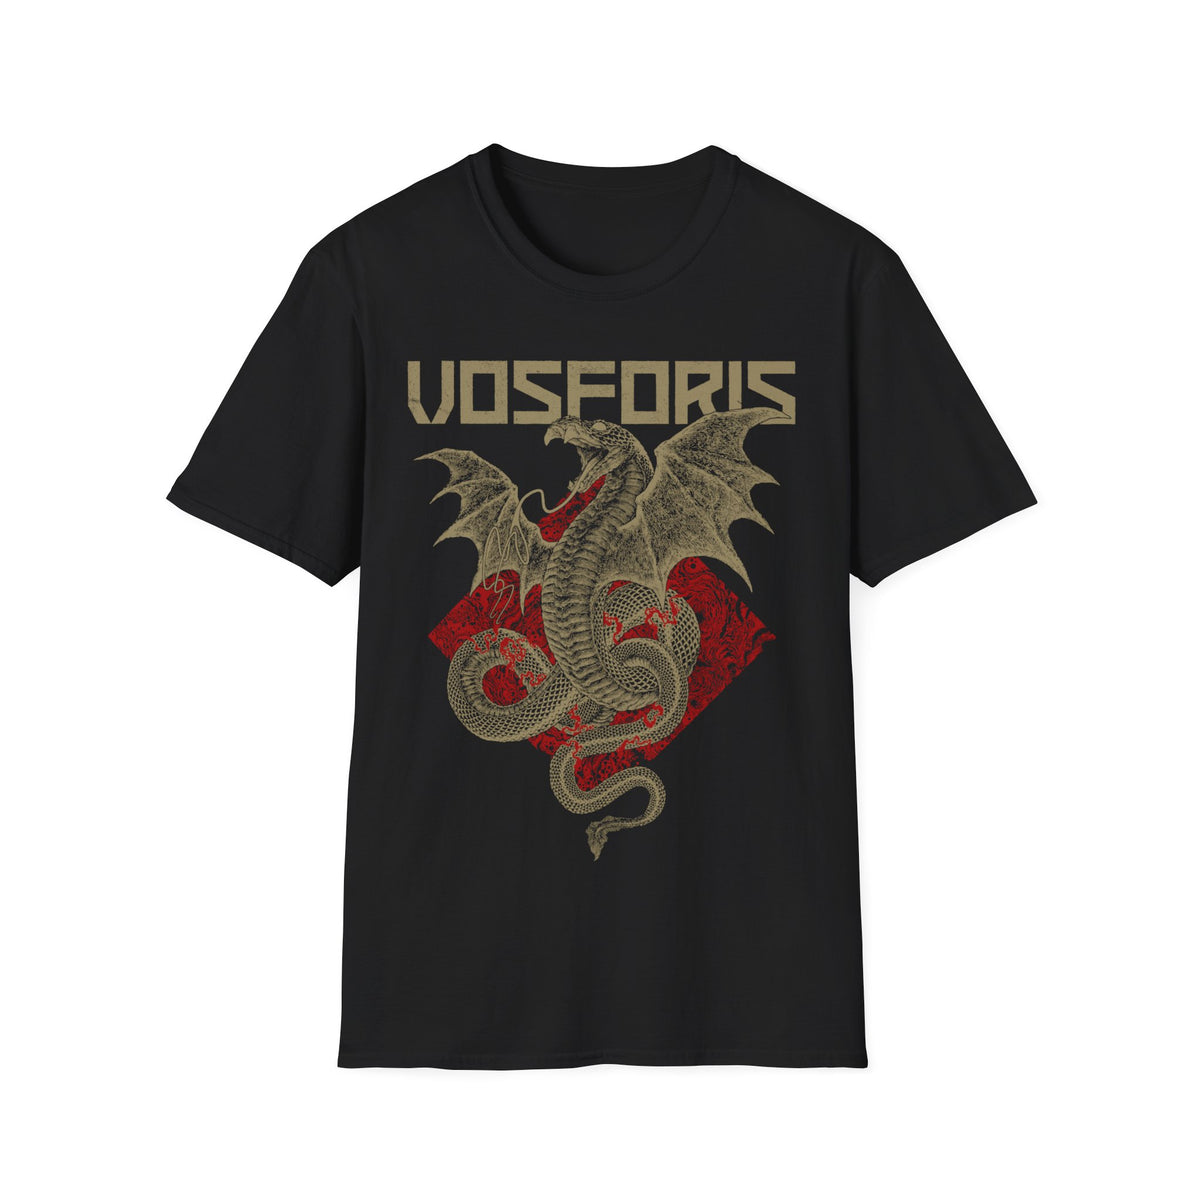 Vosforis - Psychonaut Satanist - Unisex Softstyle T-Shirt